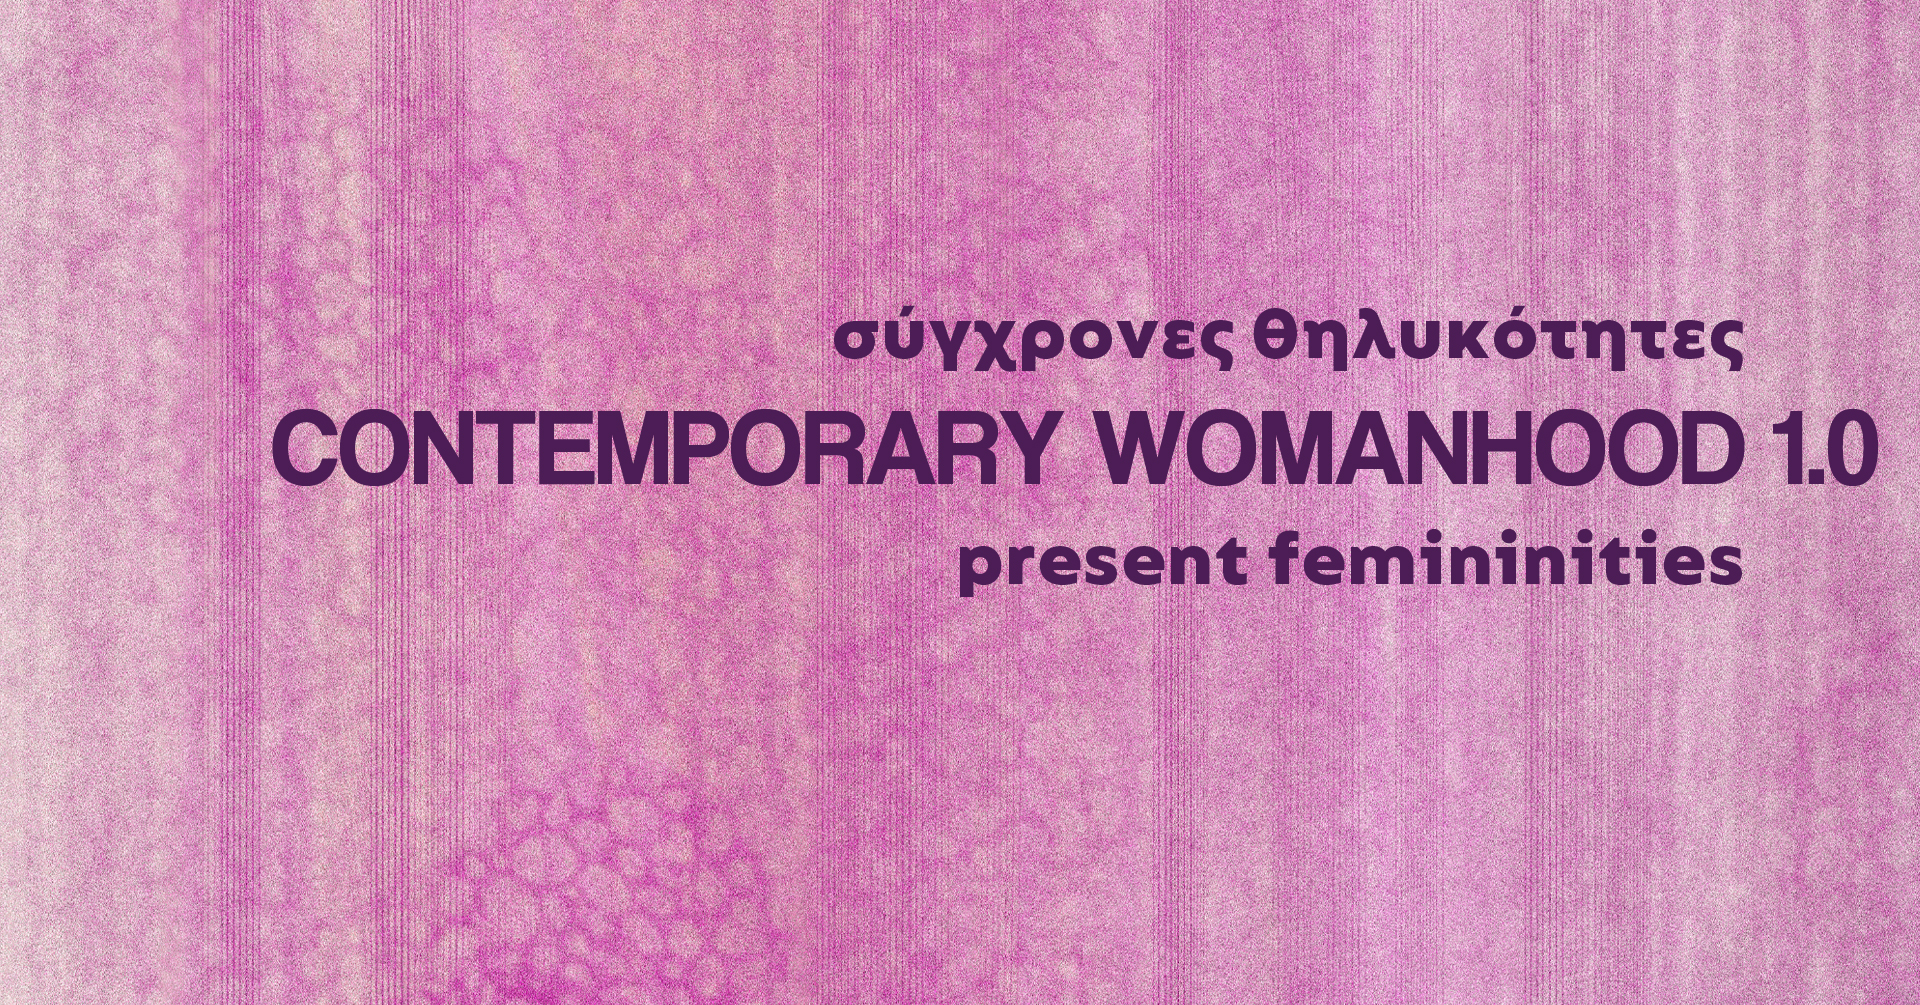 Contemporary Womanhood 1.0: present femininities